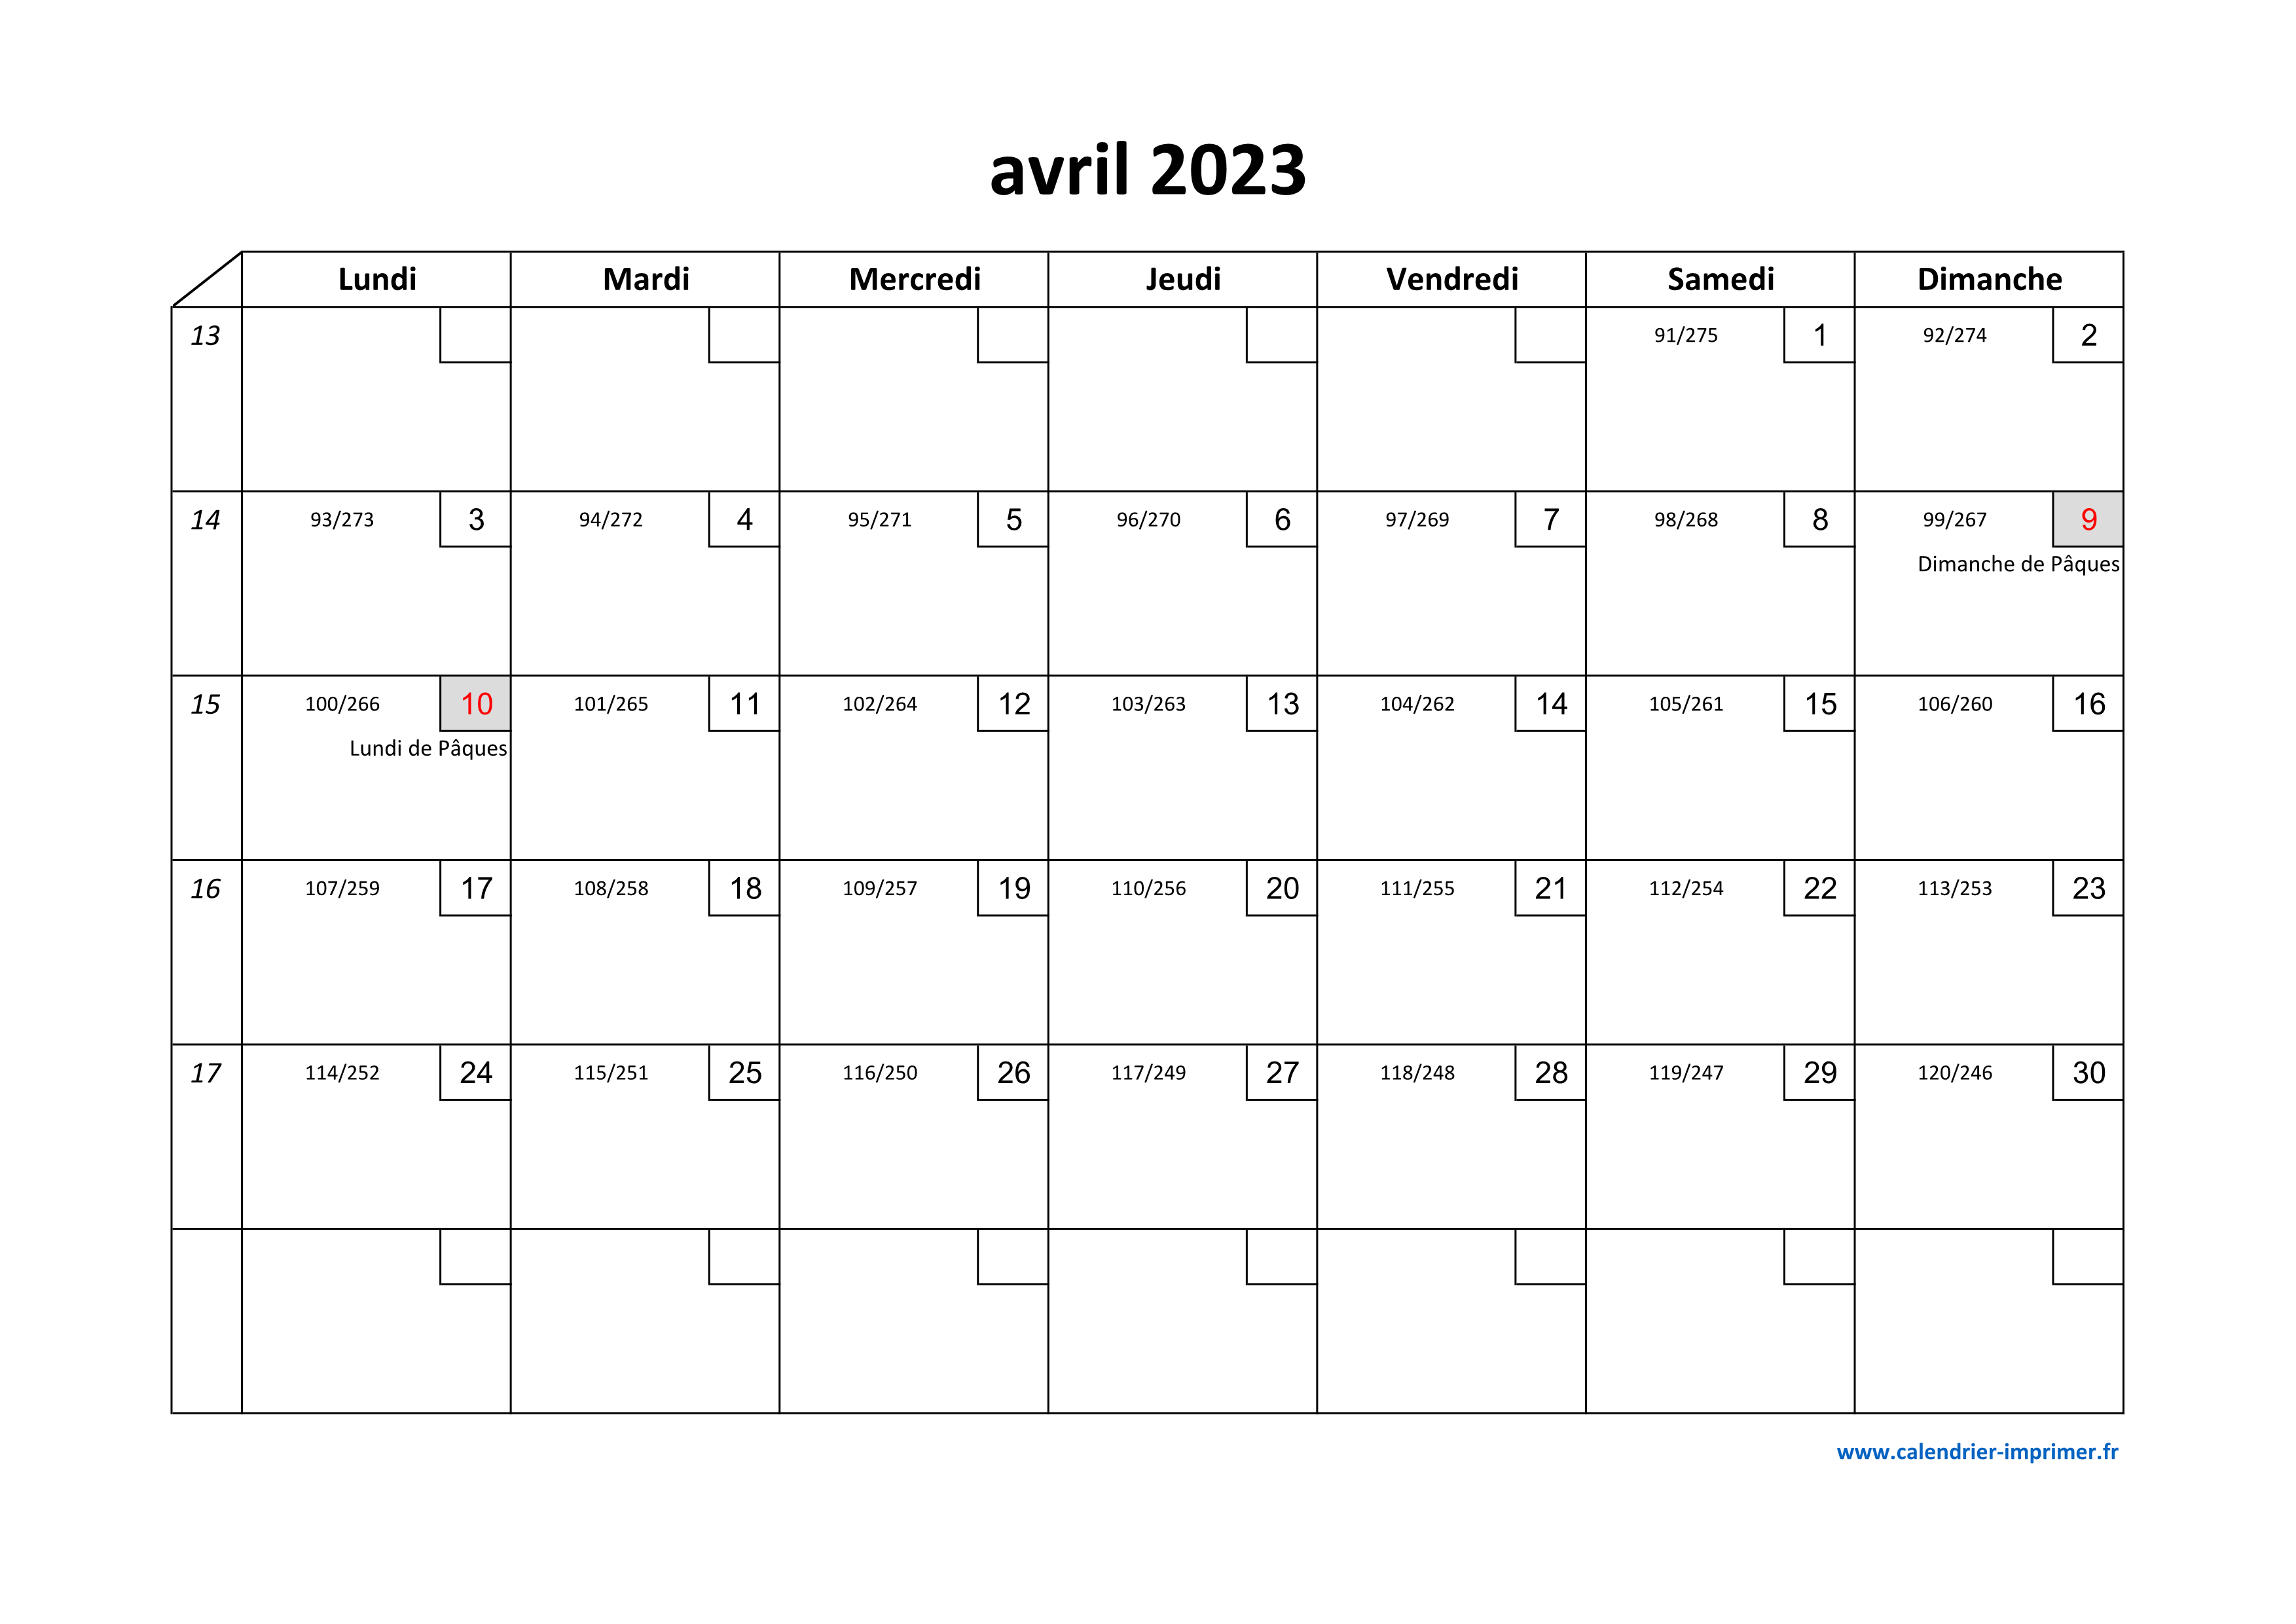 Calendrier Avril 2023 à Imprimer